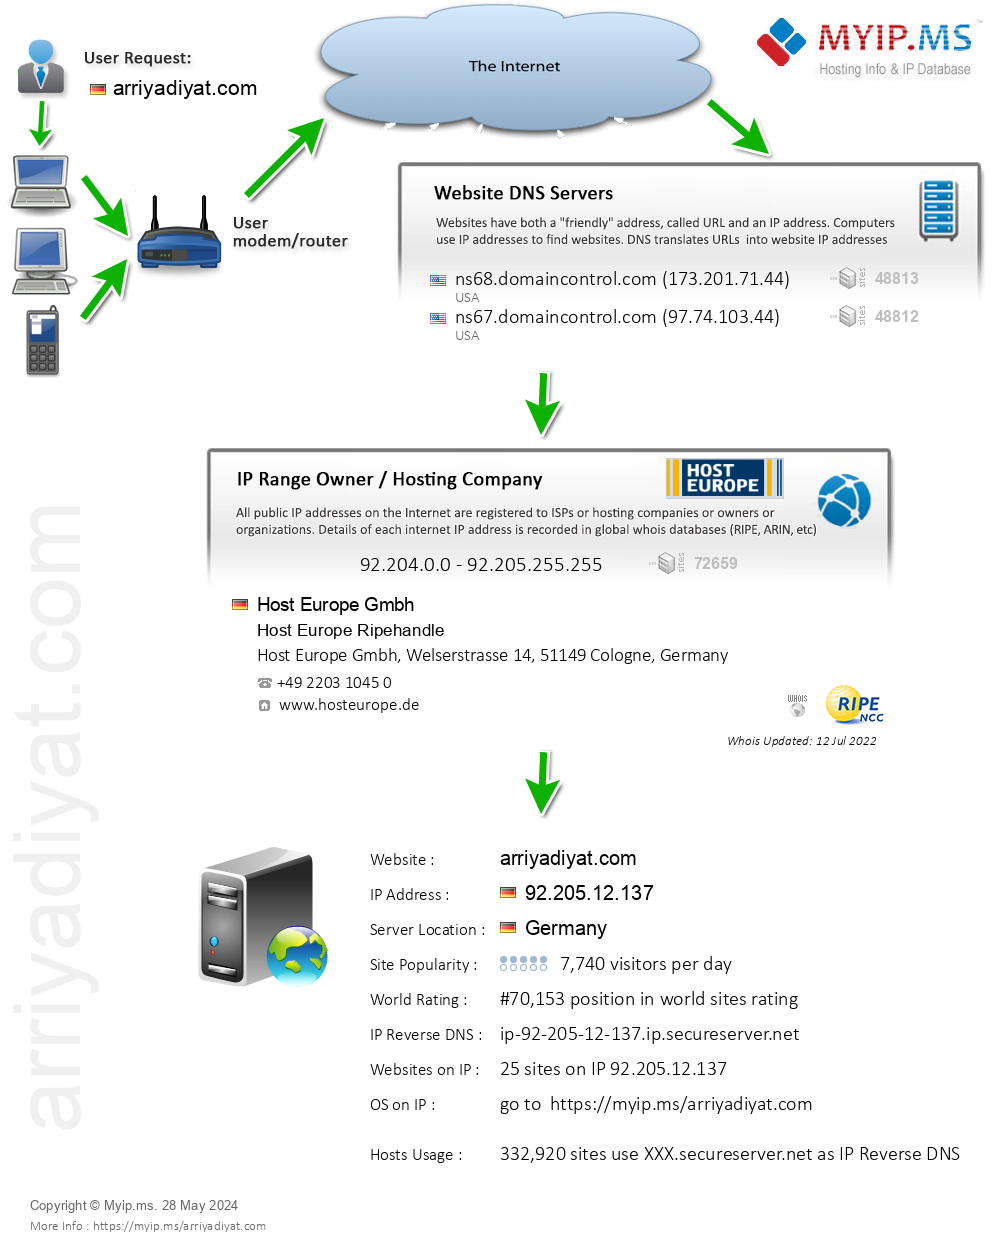 Arriyadiyat.com - Website Hosting Visual IP Diagram